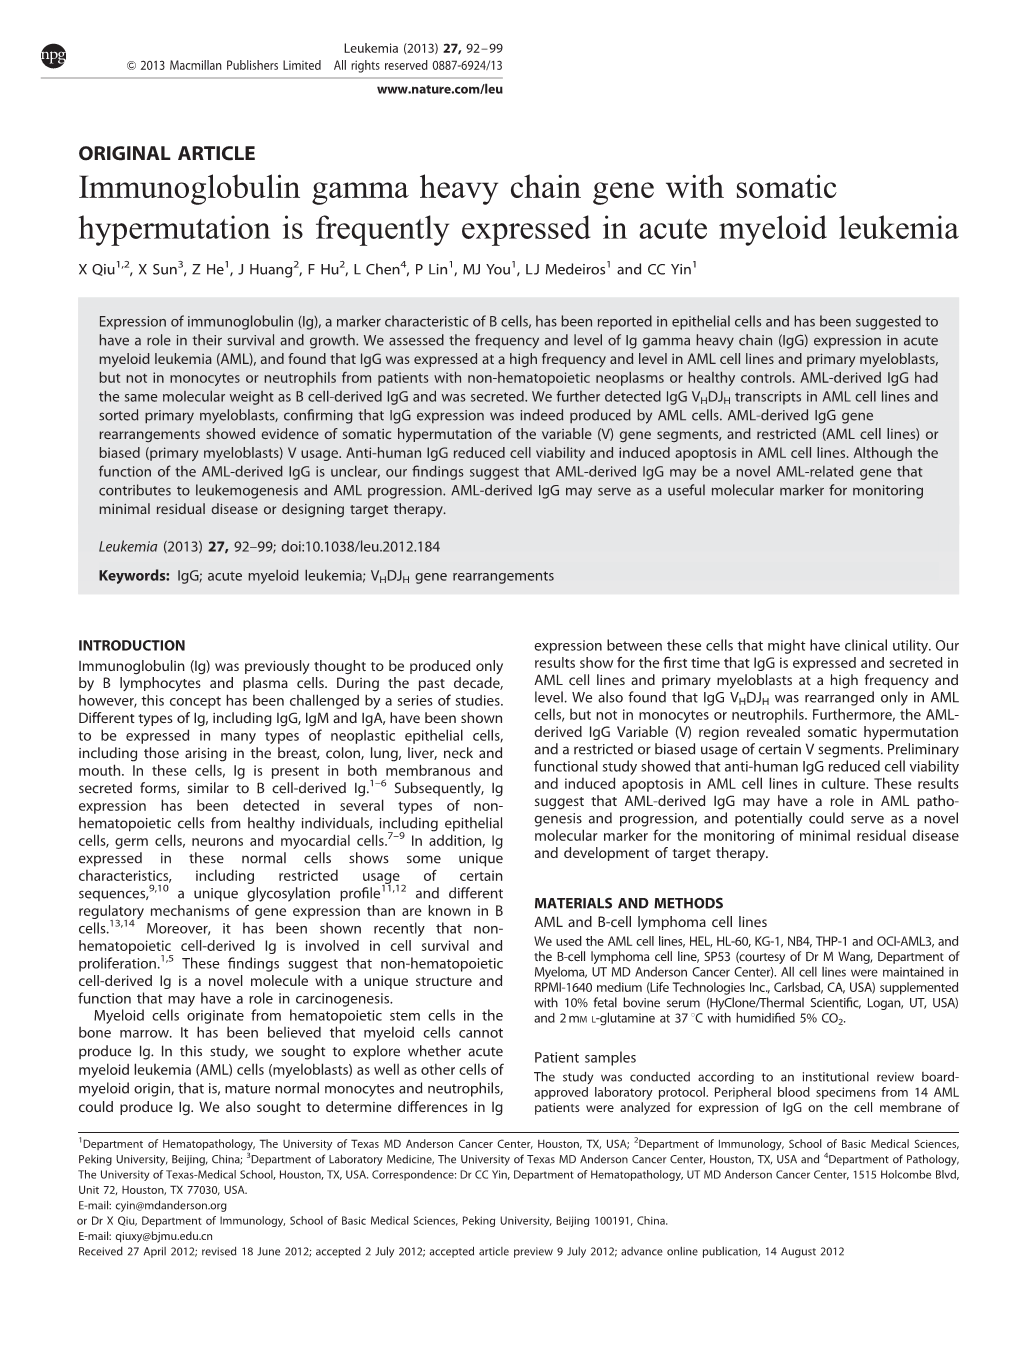 Immunoglobulin Gamma Heavy Chain Gene with Somatic Hypermutation Is Frequently Expressed in Acute Myeloid Leukemia